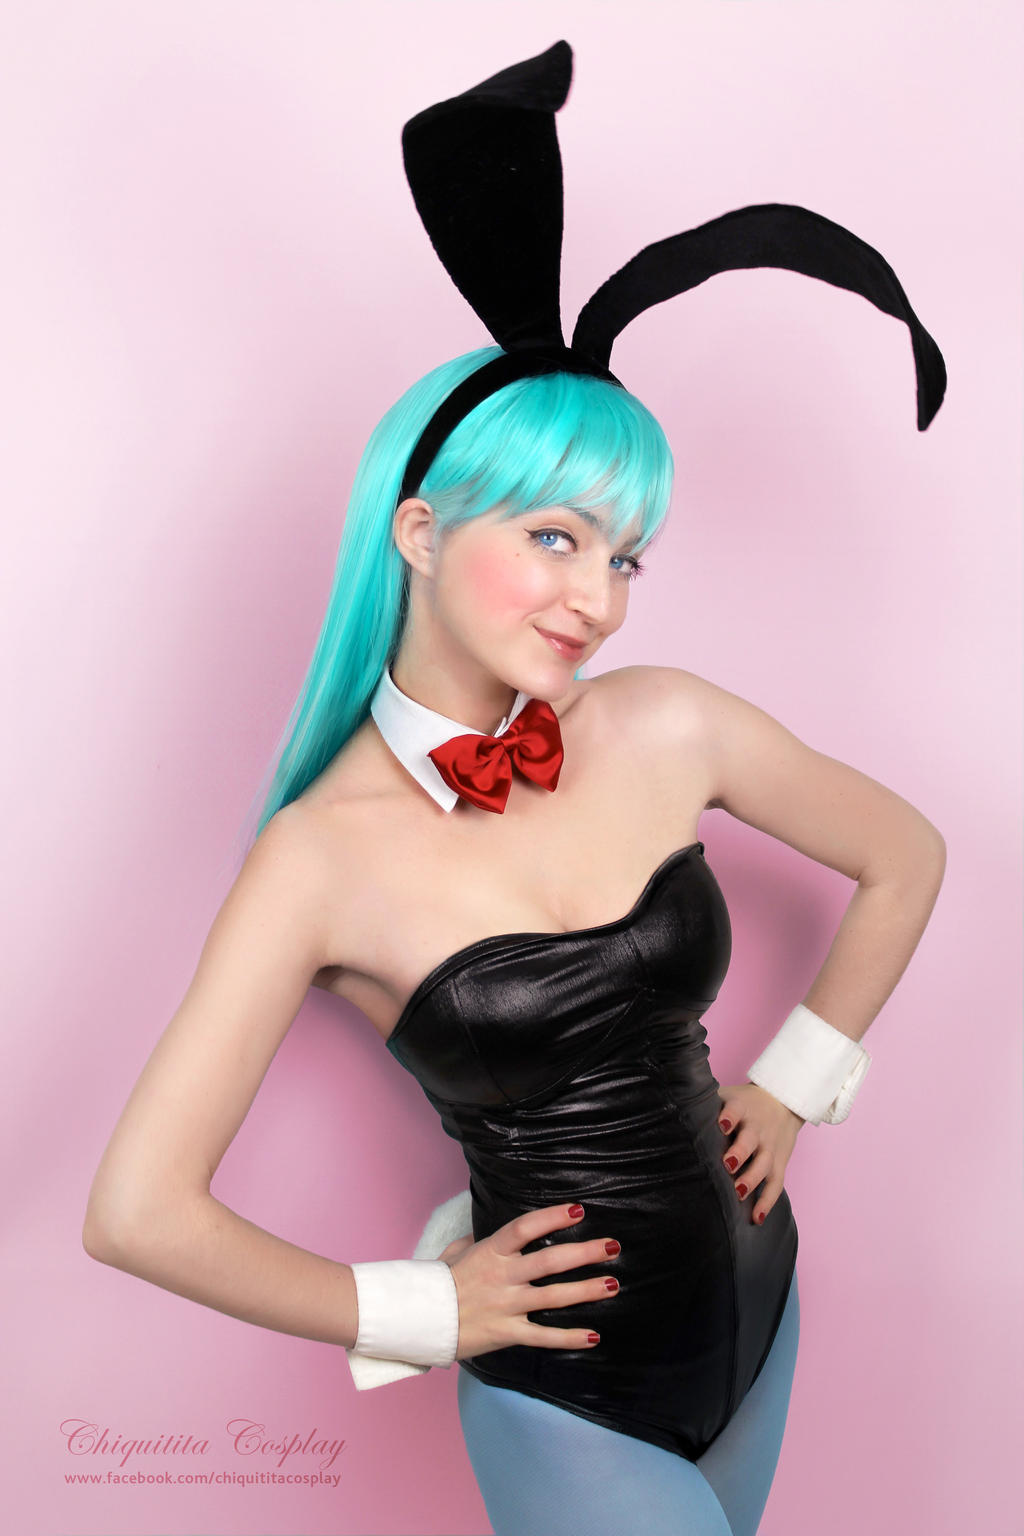 bulma___bunny_girl_outfit_by_chiquitita_cosplay-d5plhb9.jpg